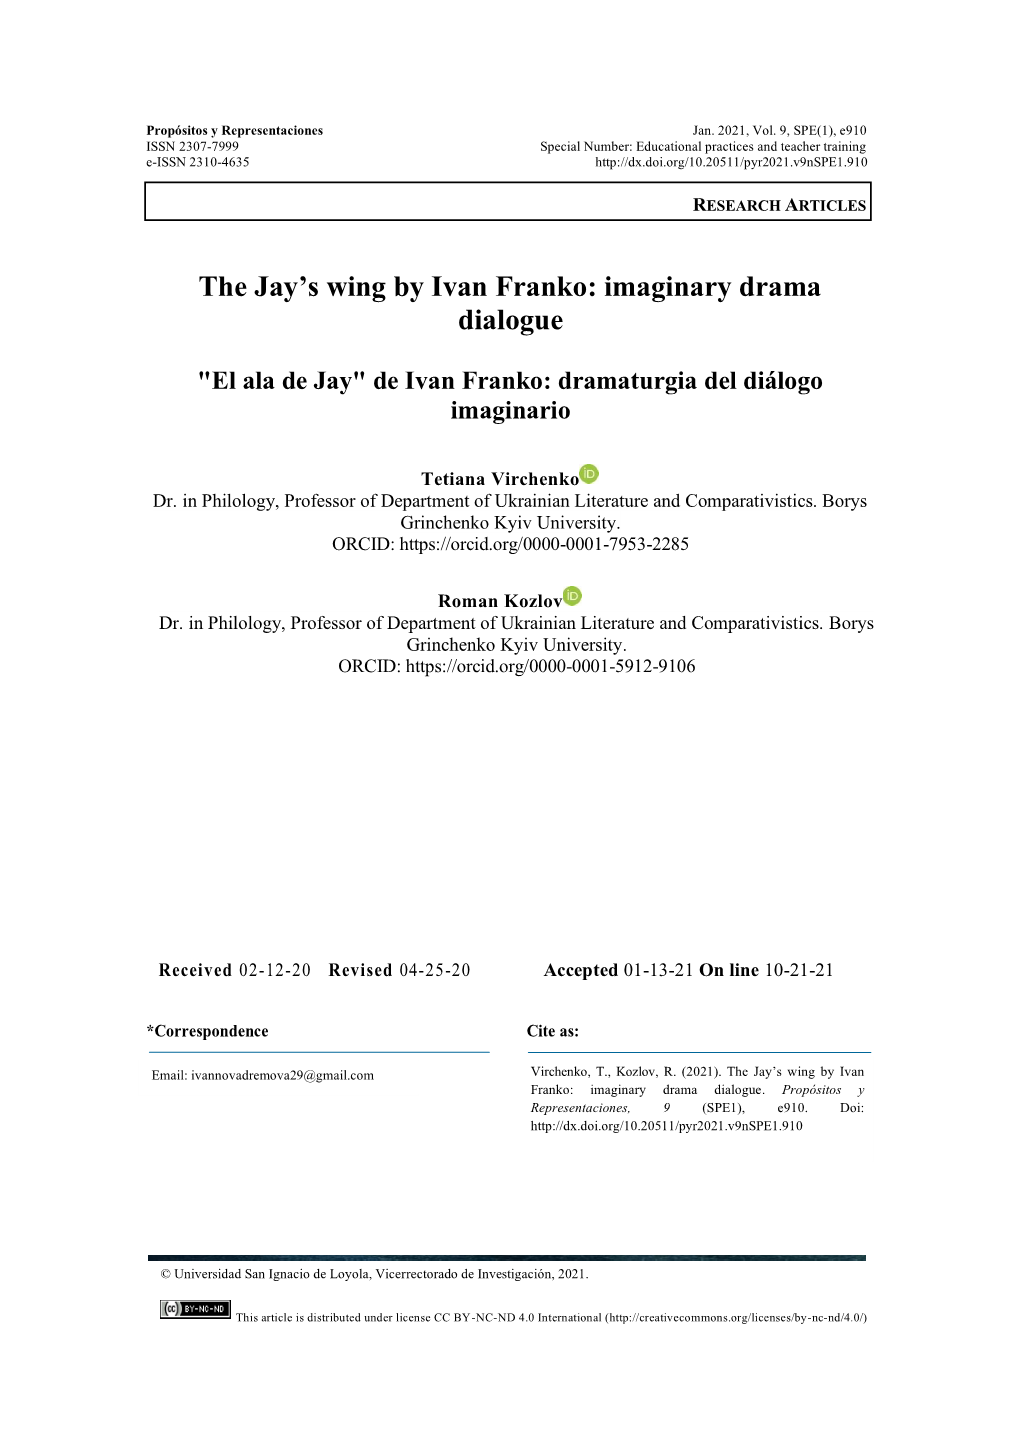 The Jay's Wing by Ivan Franko: Imaginary Drama Dialogue